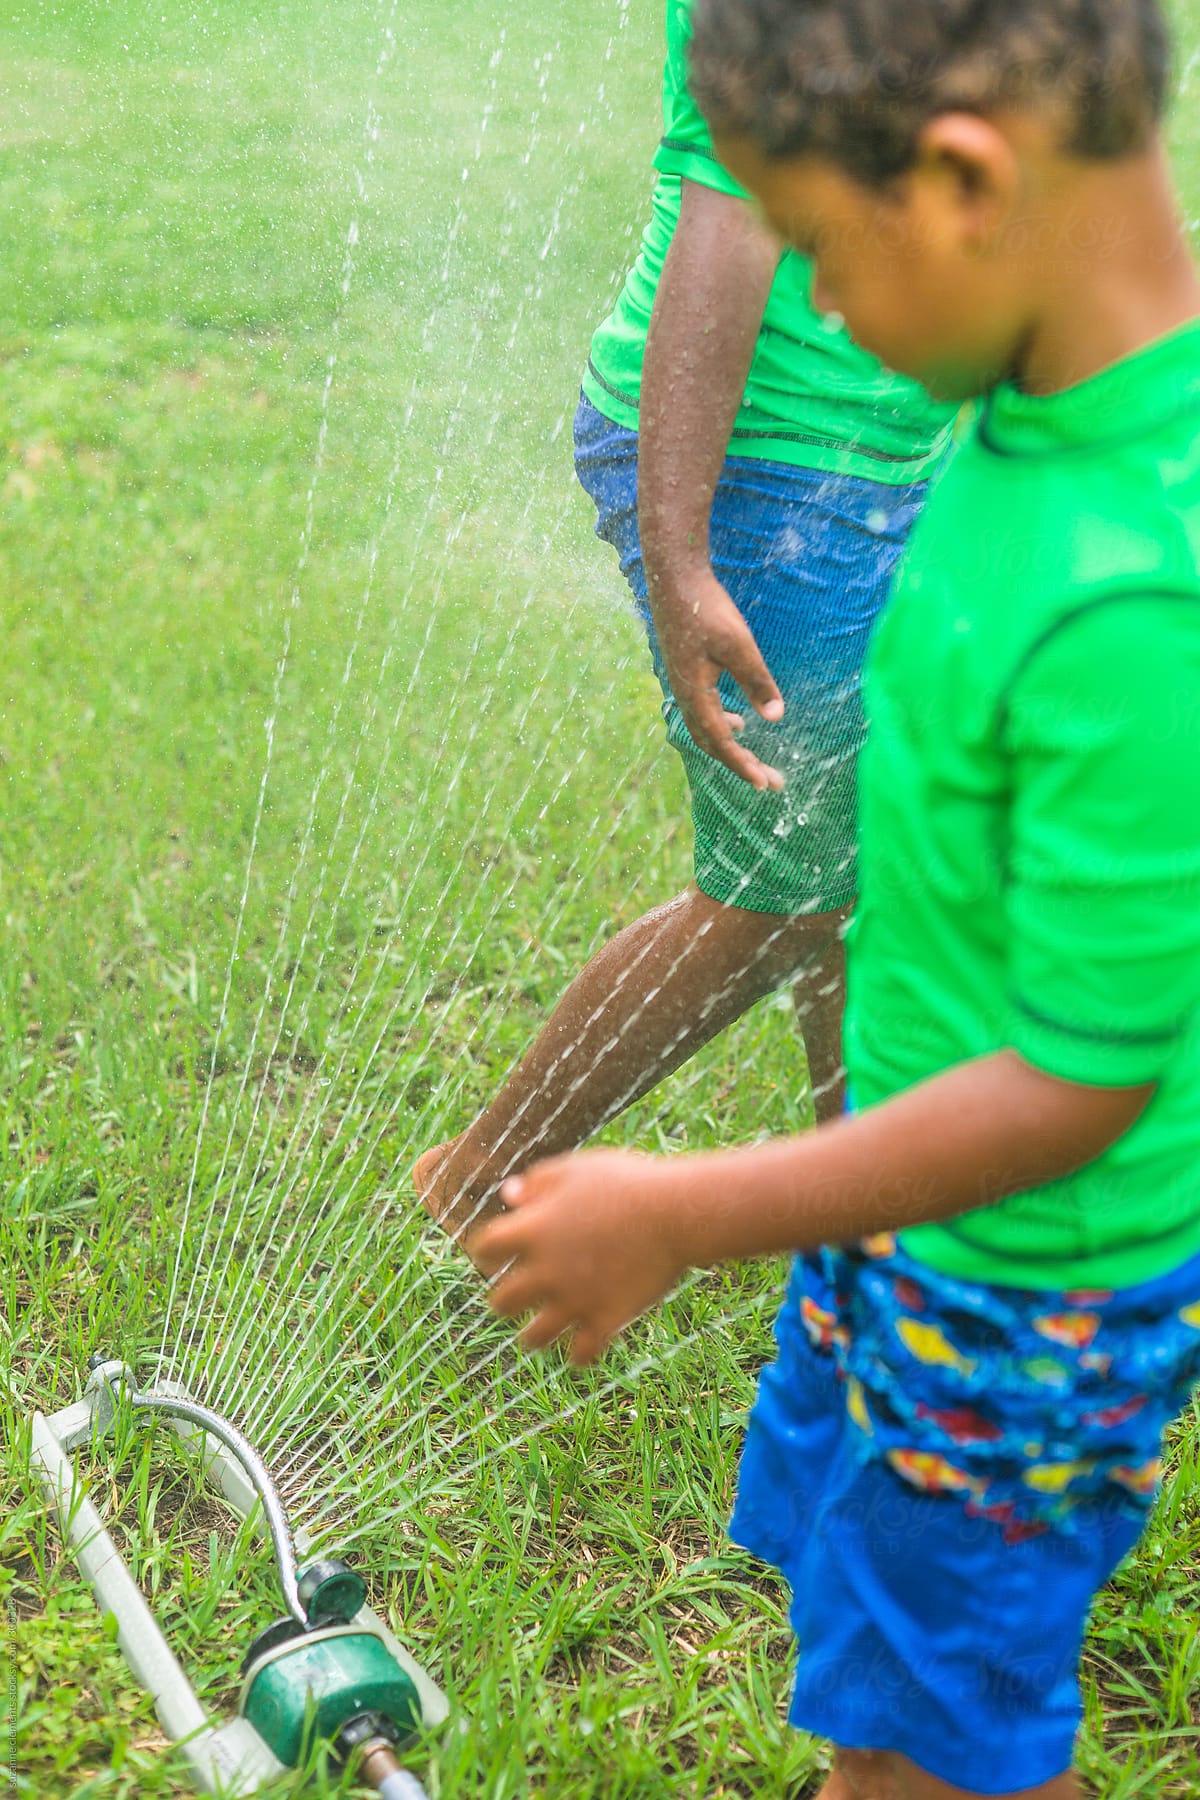 Boys Play in the Lawn Sprinkler